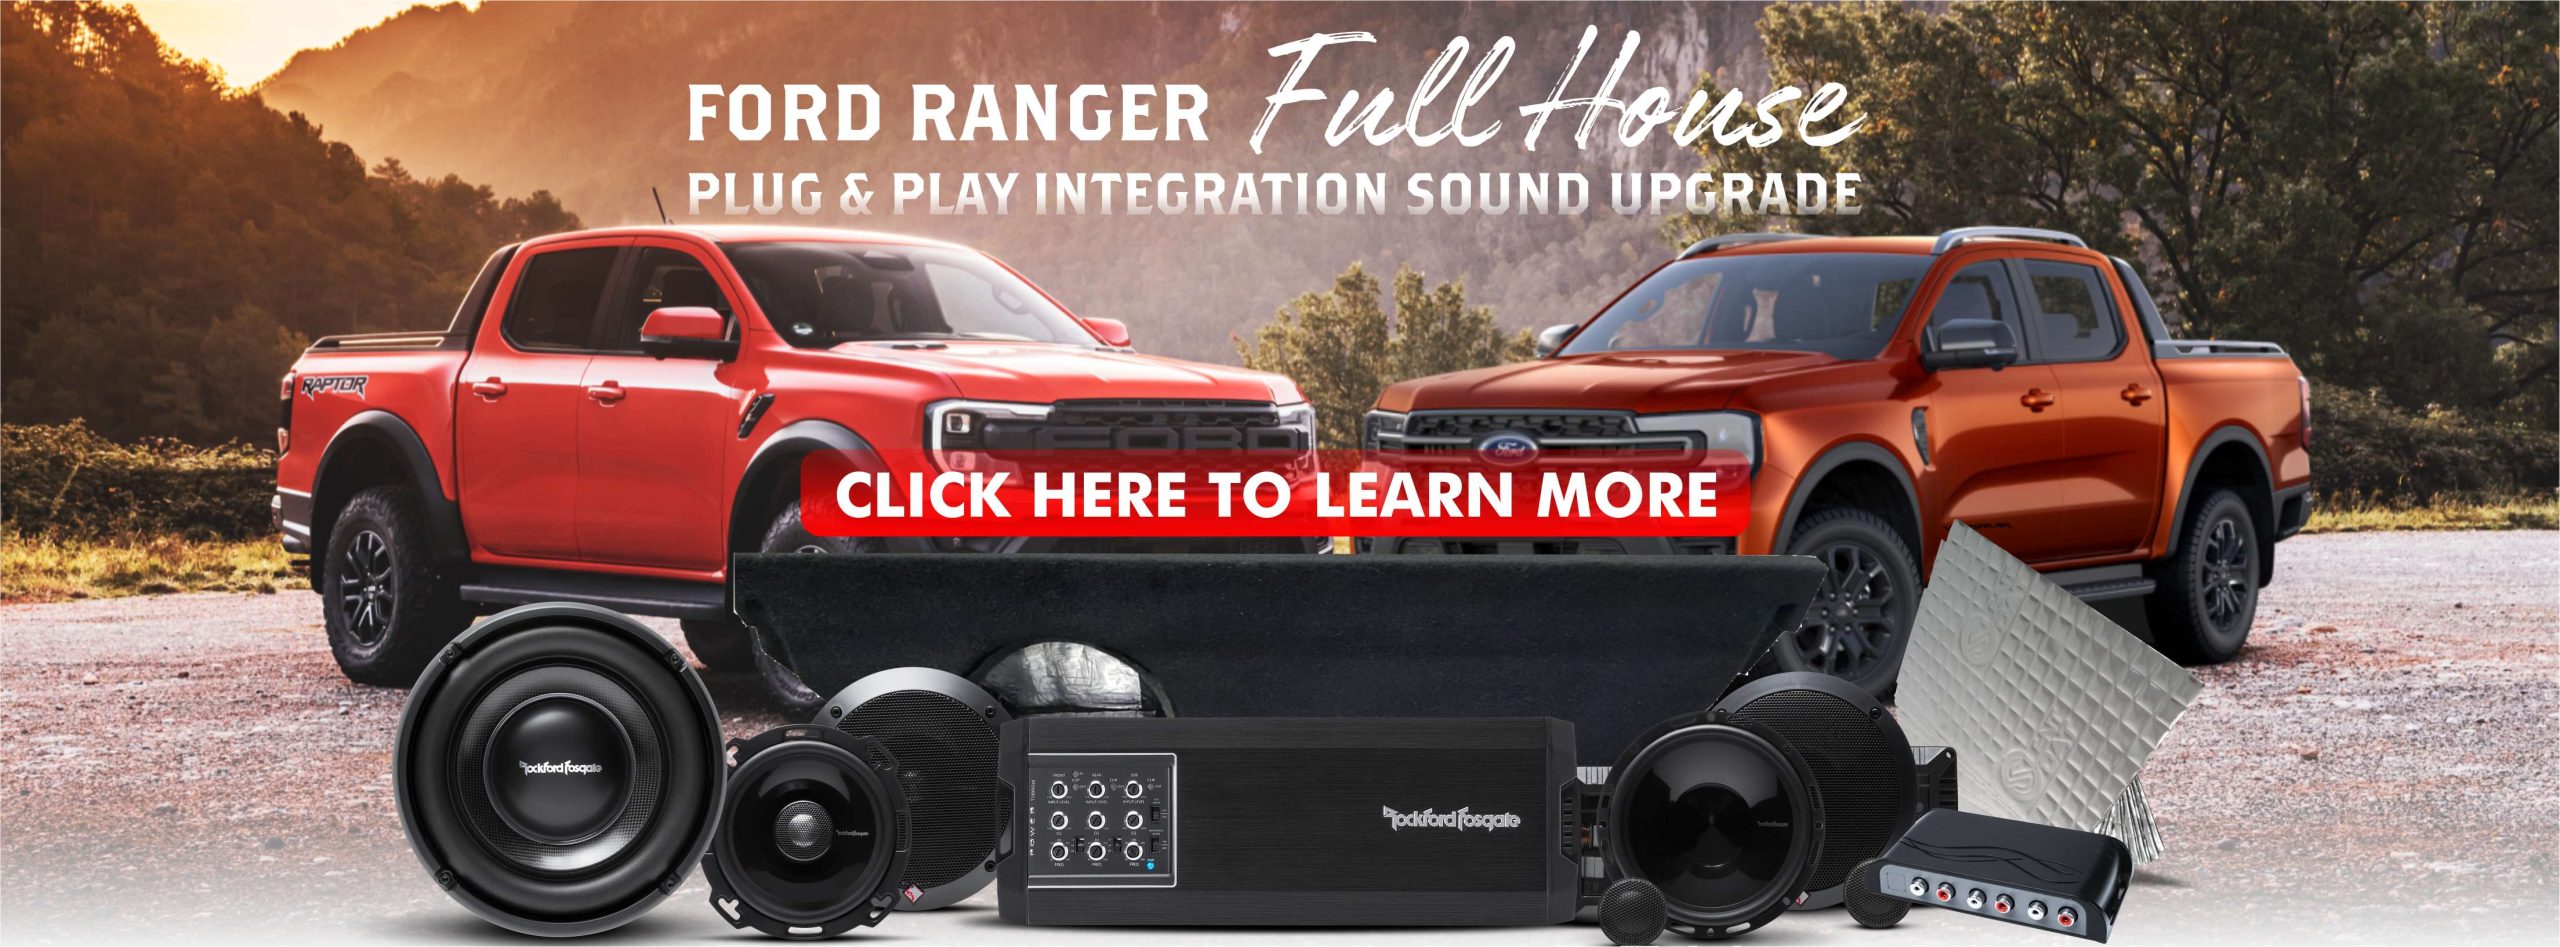 RF - Ford Ranger Upgrades - Web banner 2